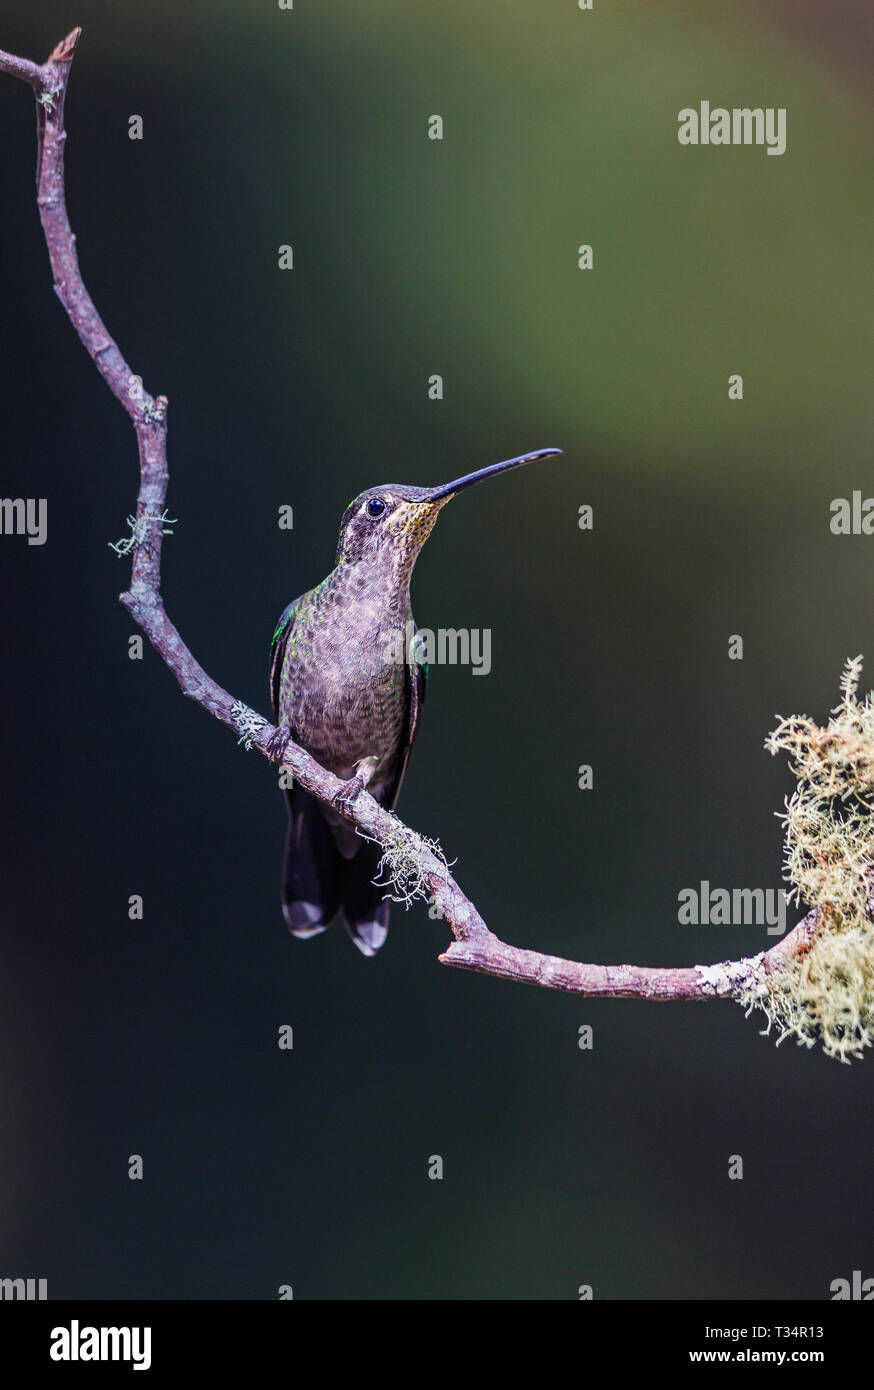 Female Talamanca Hummingbird on a perch against a dark background Stock Photo